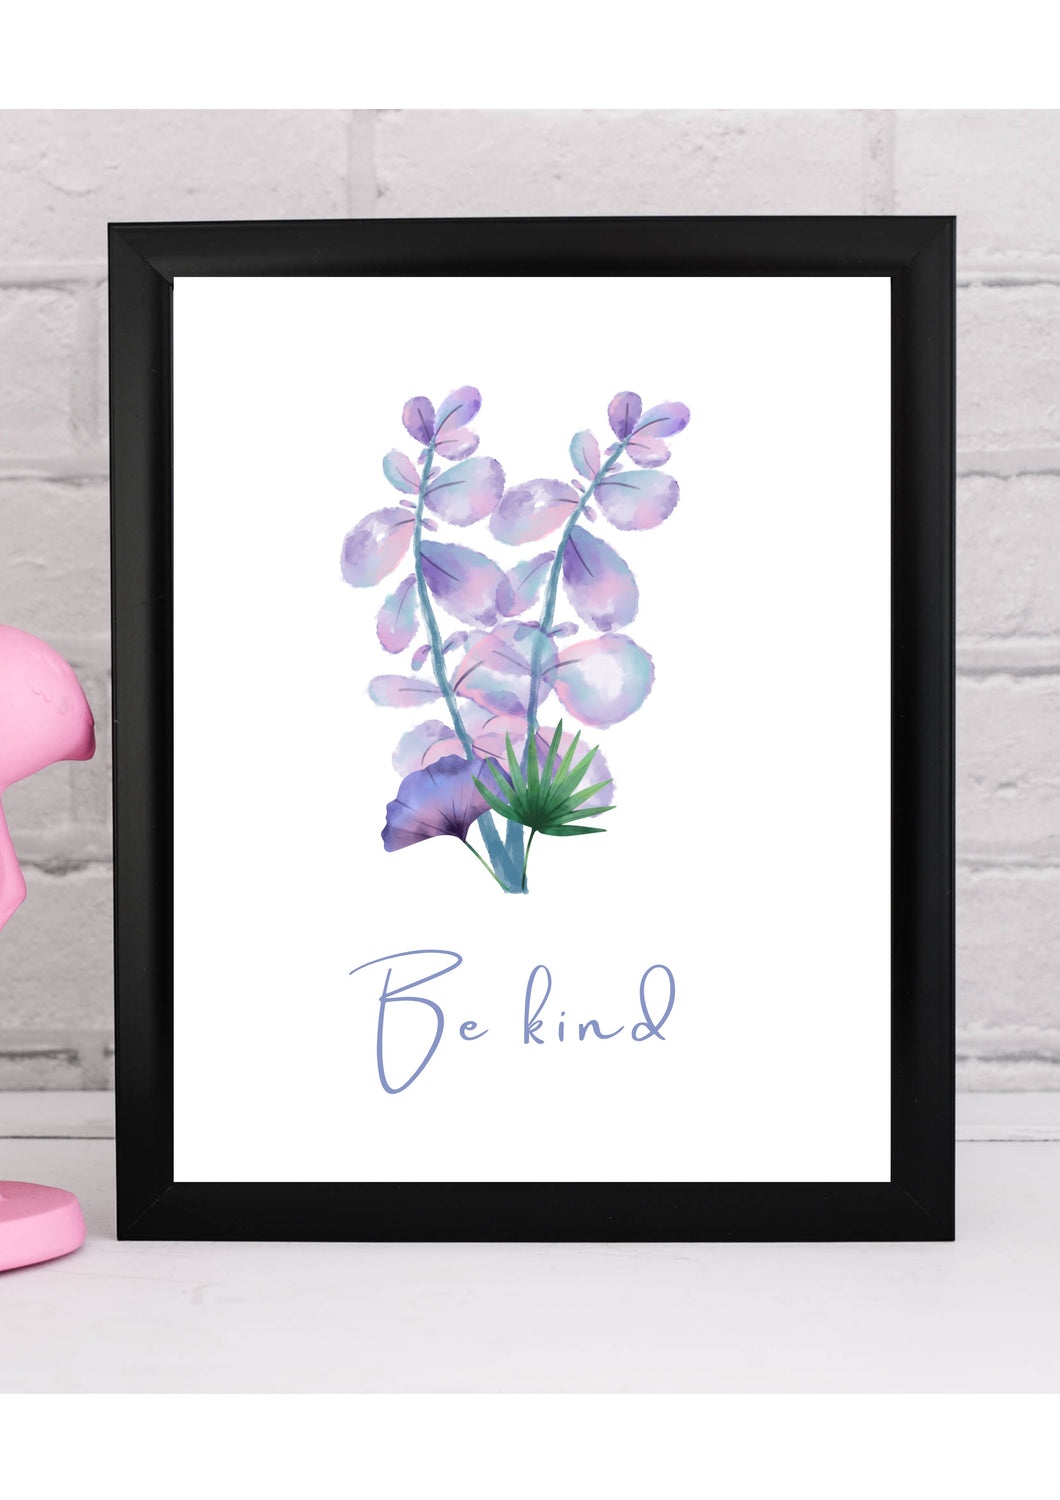 Printable Artwork | Be kind